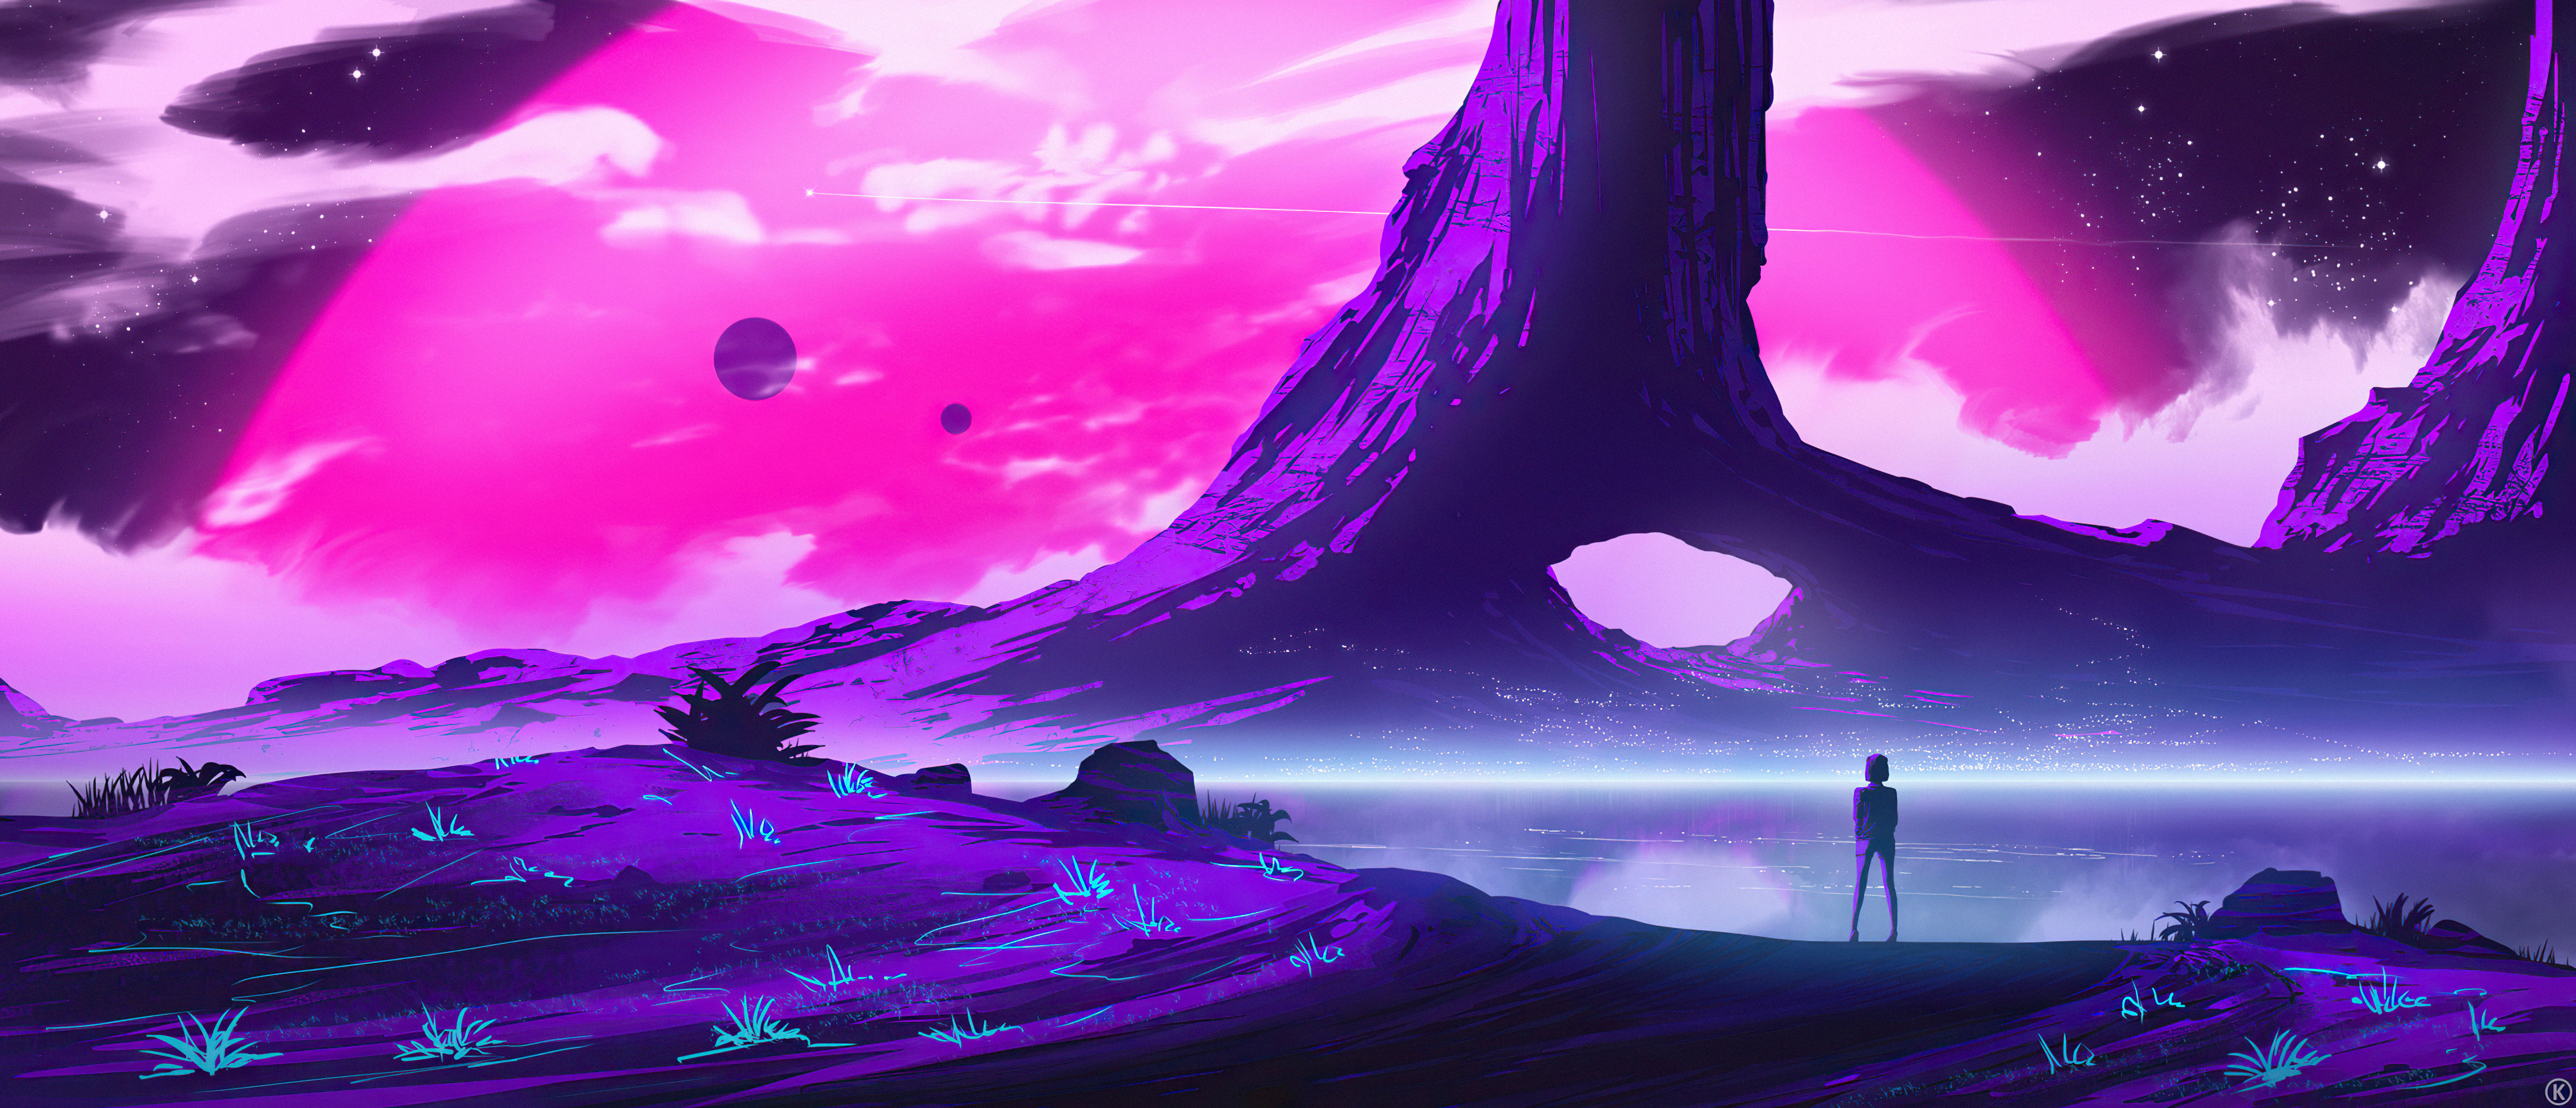 Artwork ArtStation 4 K Landscape Pink Artist Purple Background 4650x2000